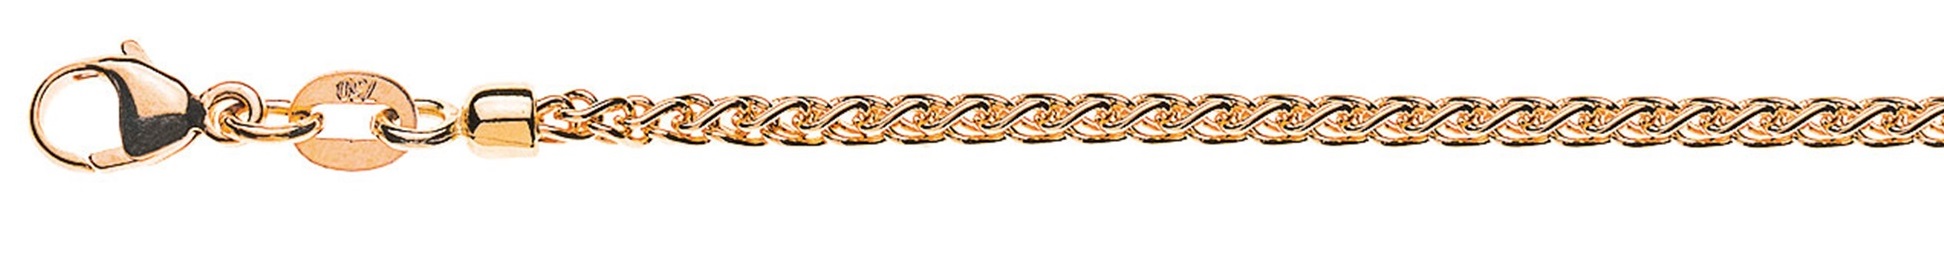 AURONOS Prestige Collier chaîne en or rose 18K 40cm 2.15mm